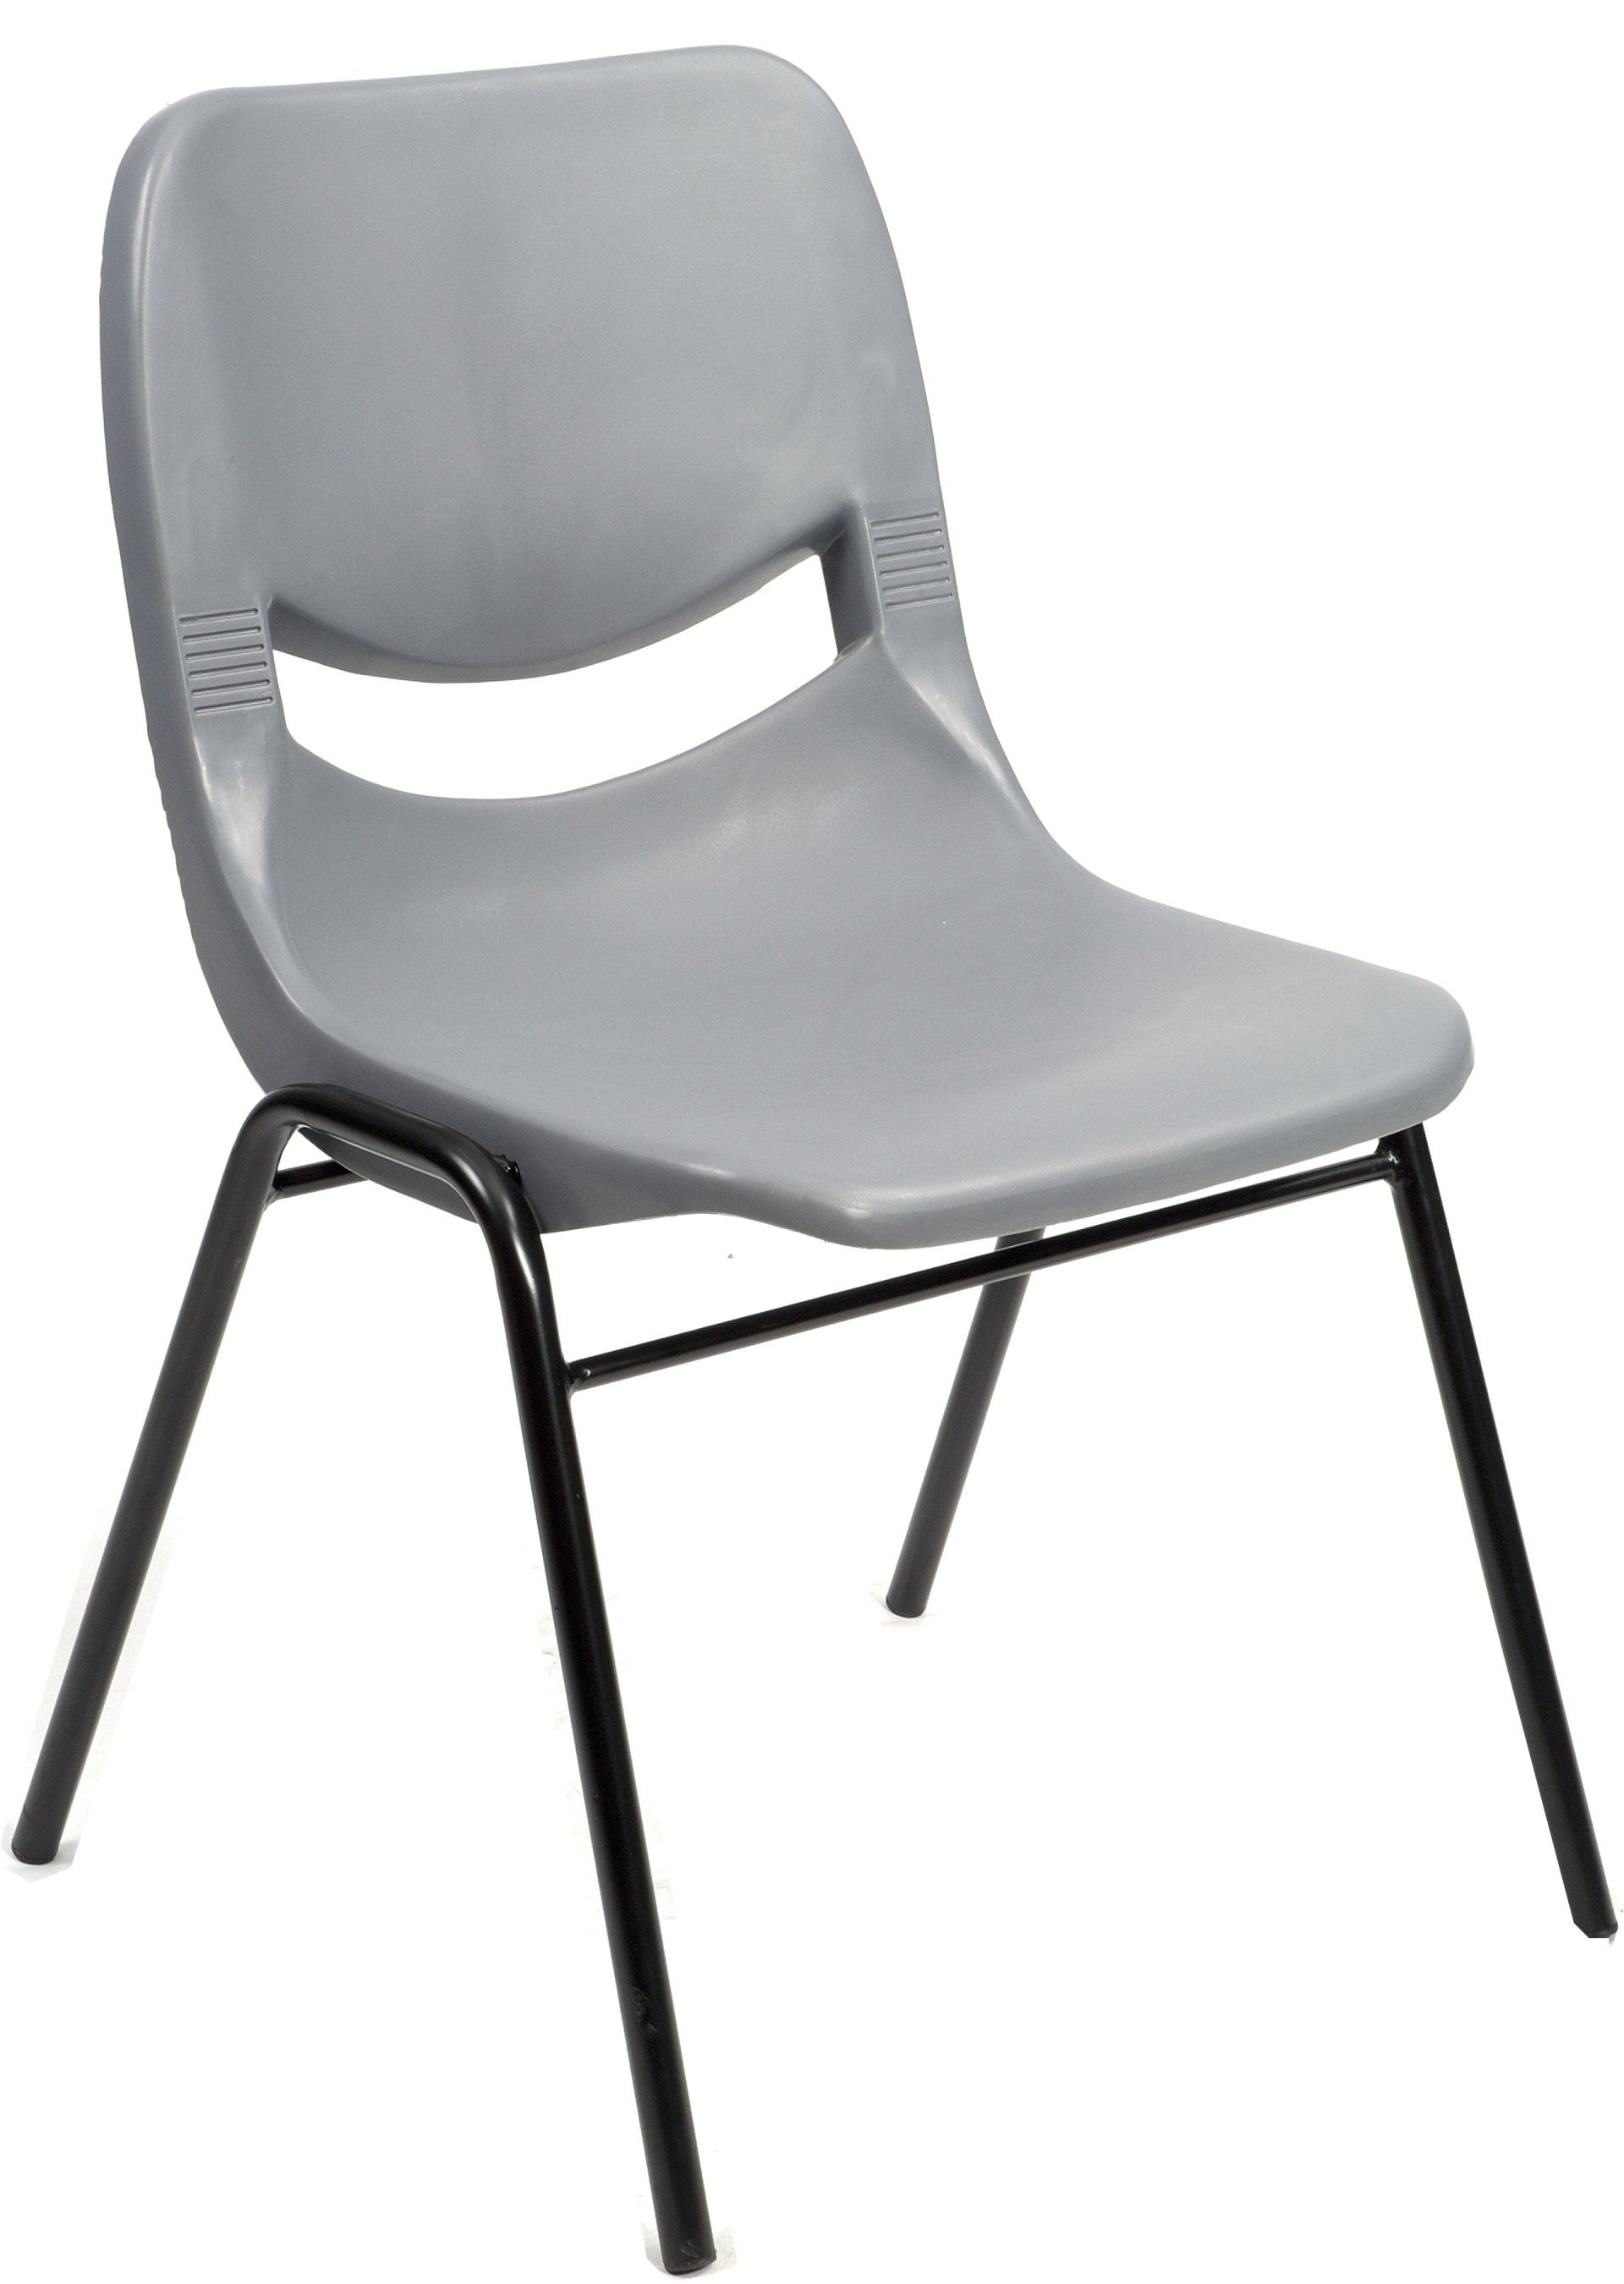 plastic stacker chair